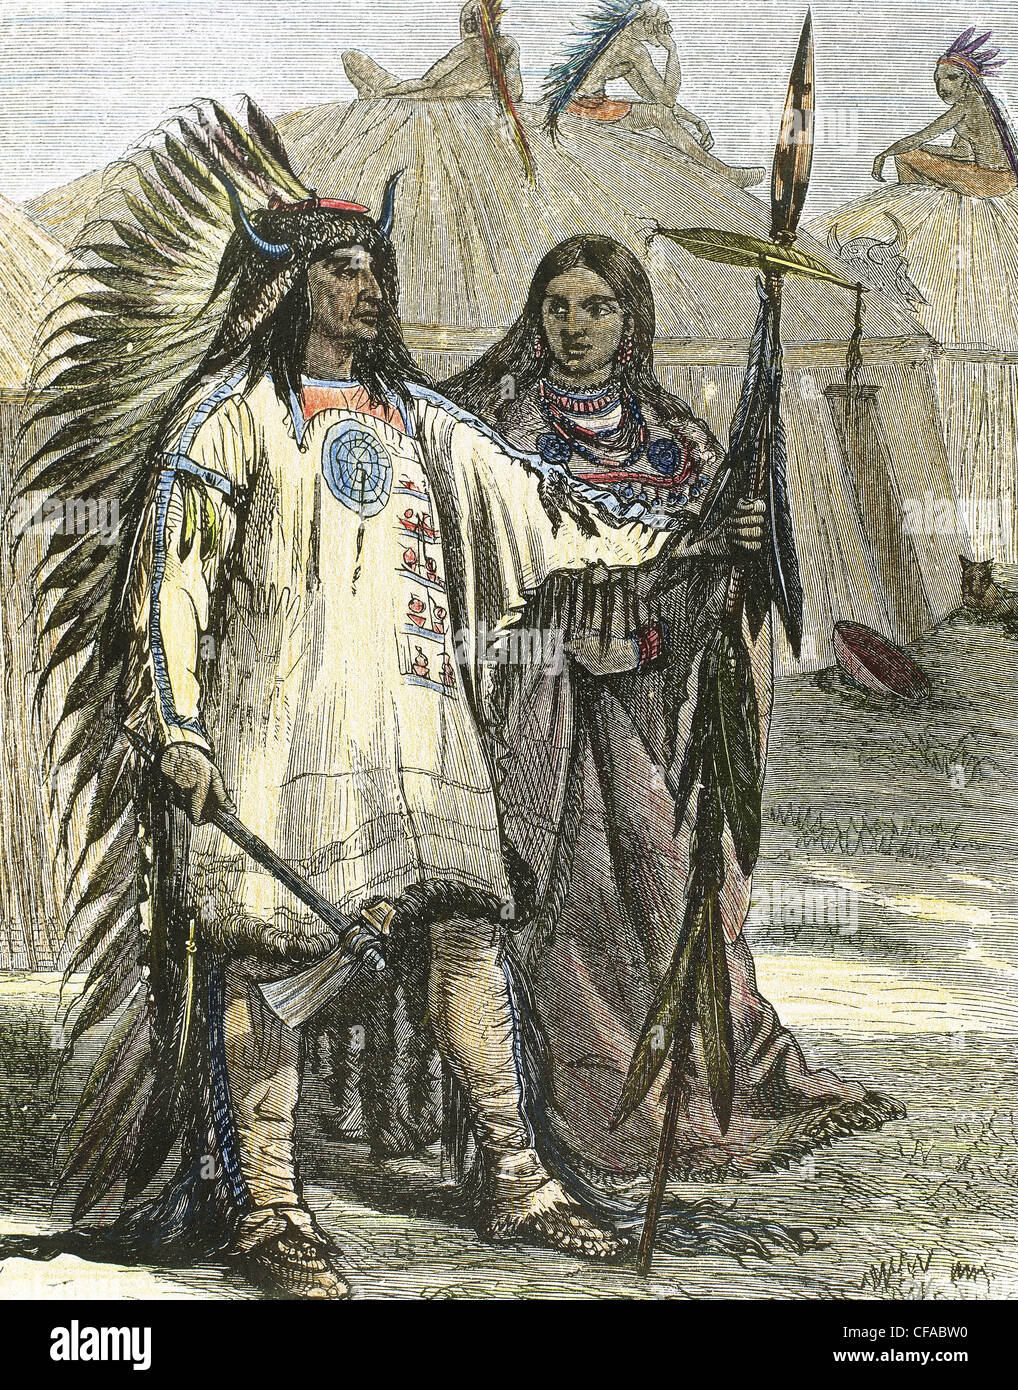 Indianer. Farbige Gravur, 1880. Stockfoto